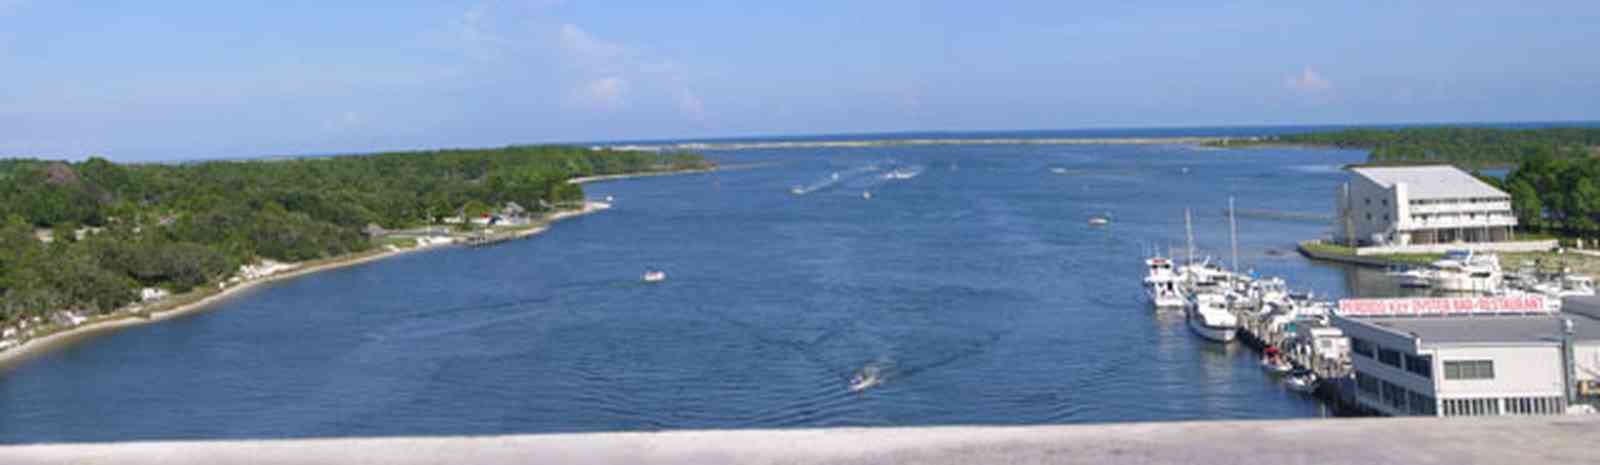 Perdido-Key:-Intercoastal-Waterway_01.jpg:  aerial view, gulf of mexcio, dock, pier, marina